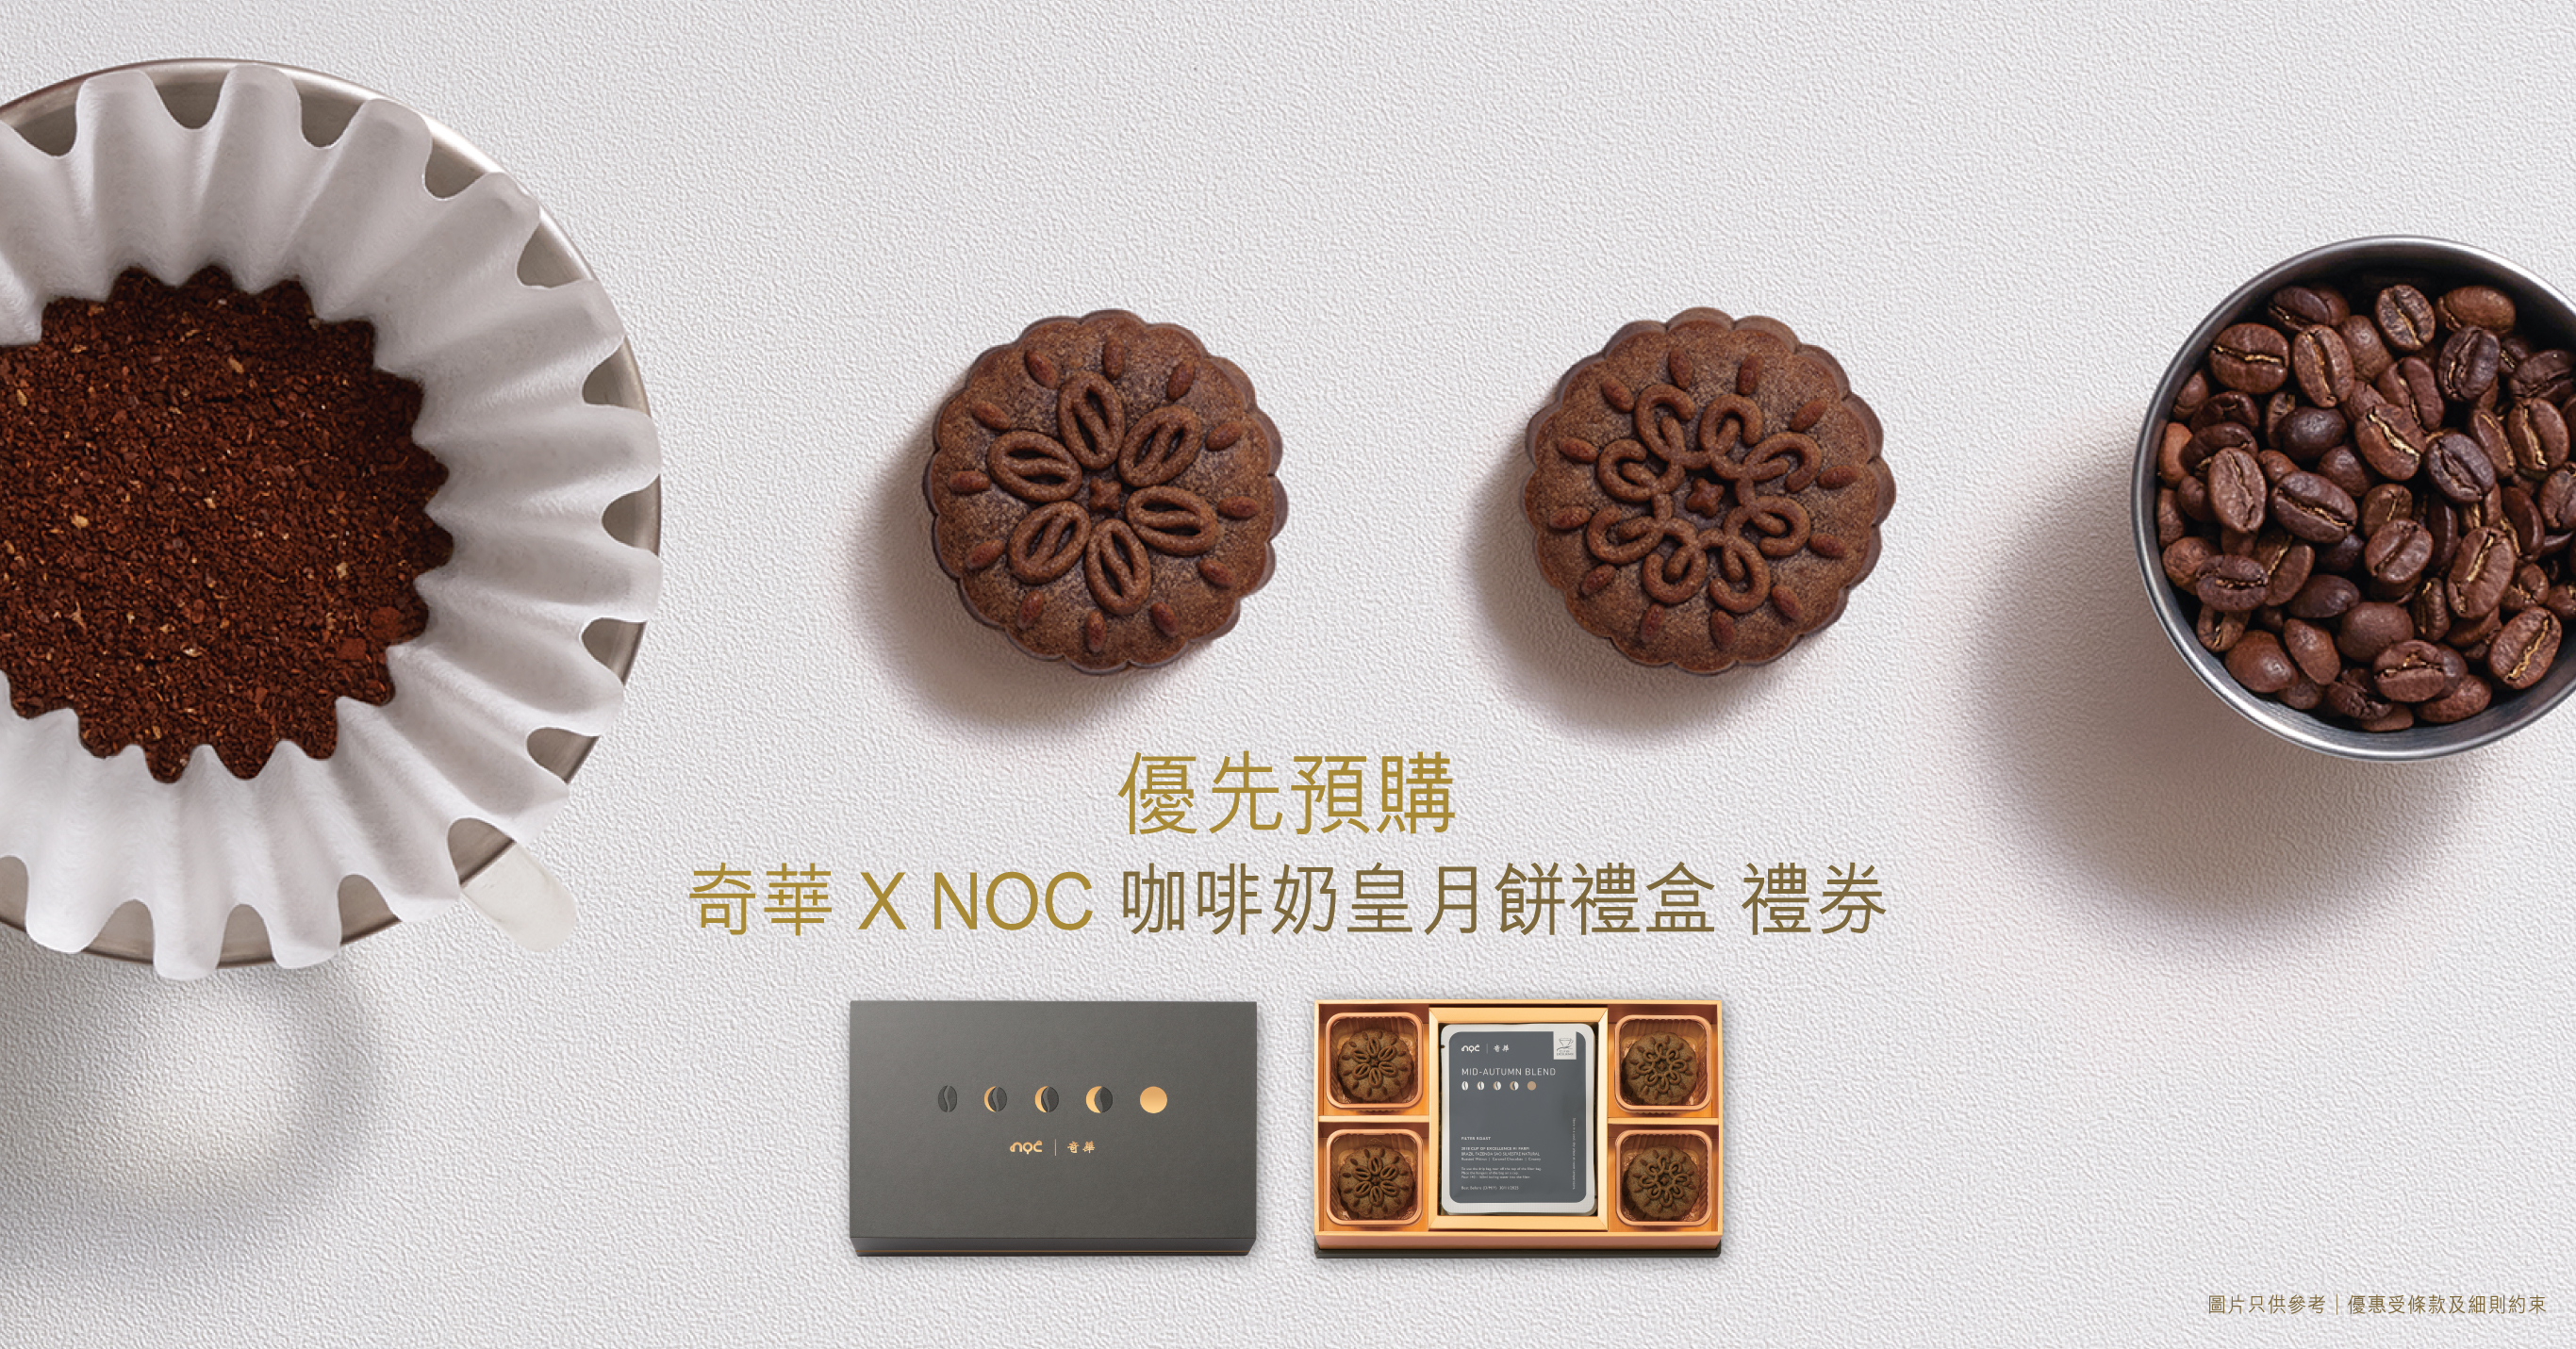 Kee Wah x NOC Assorted Coffee Custard Mooncake Gift Box